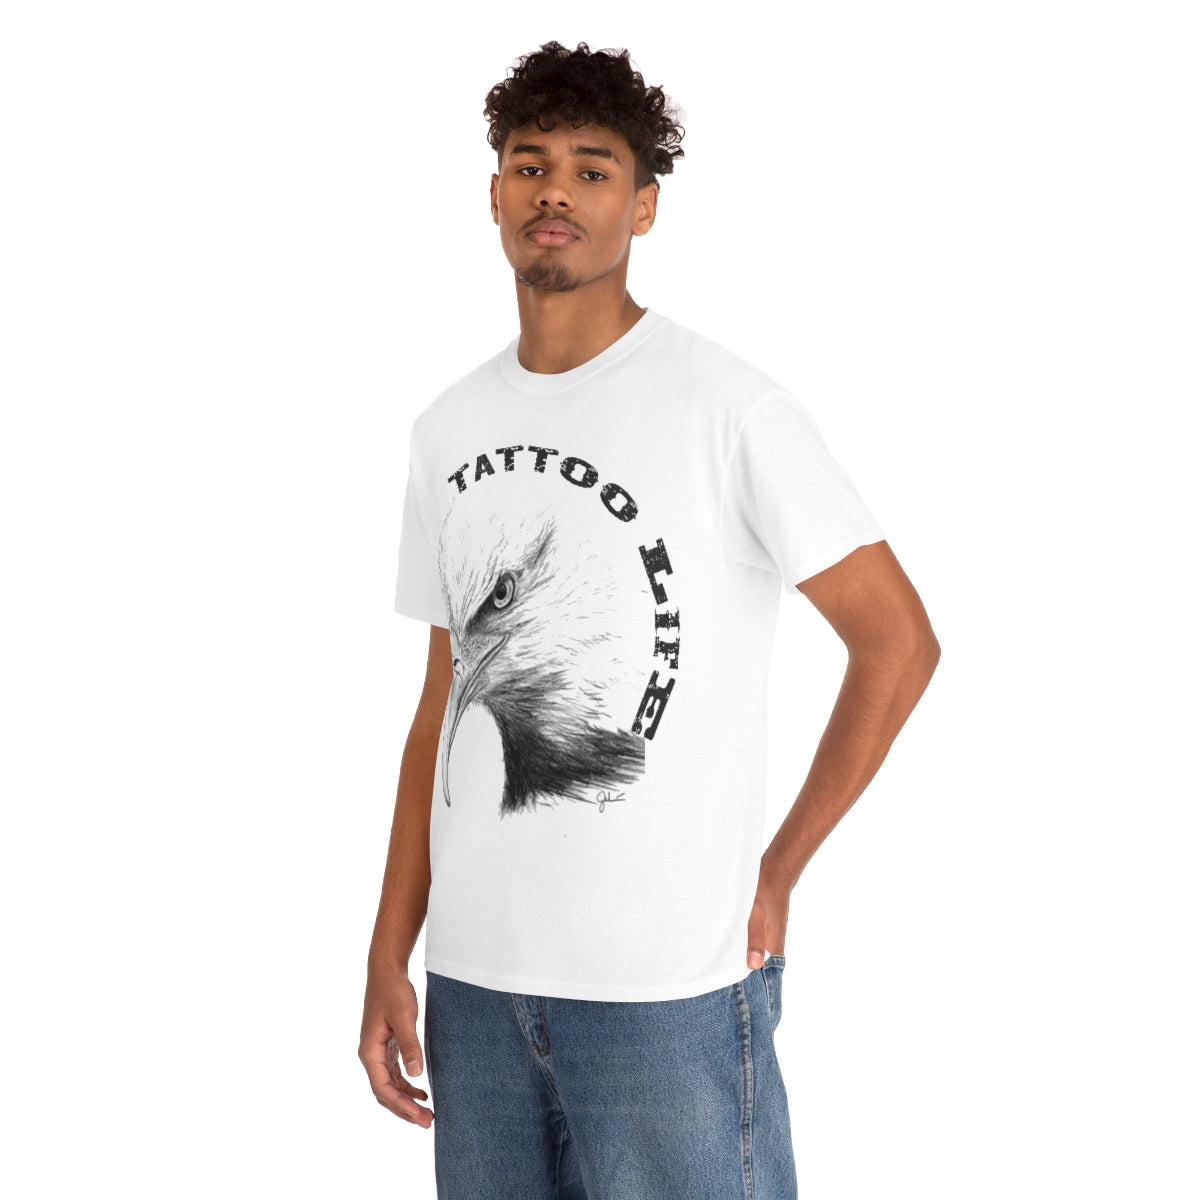 TATTOO LIFE - Bald Eagle Shirt